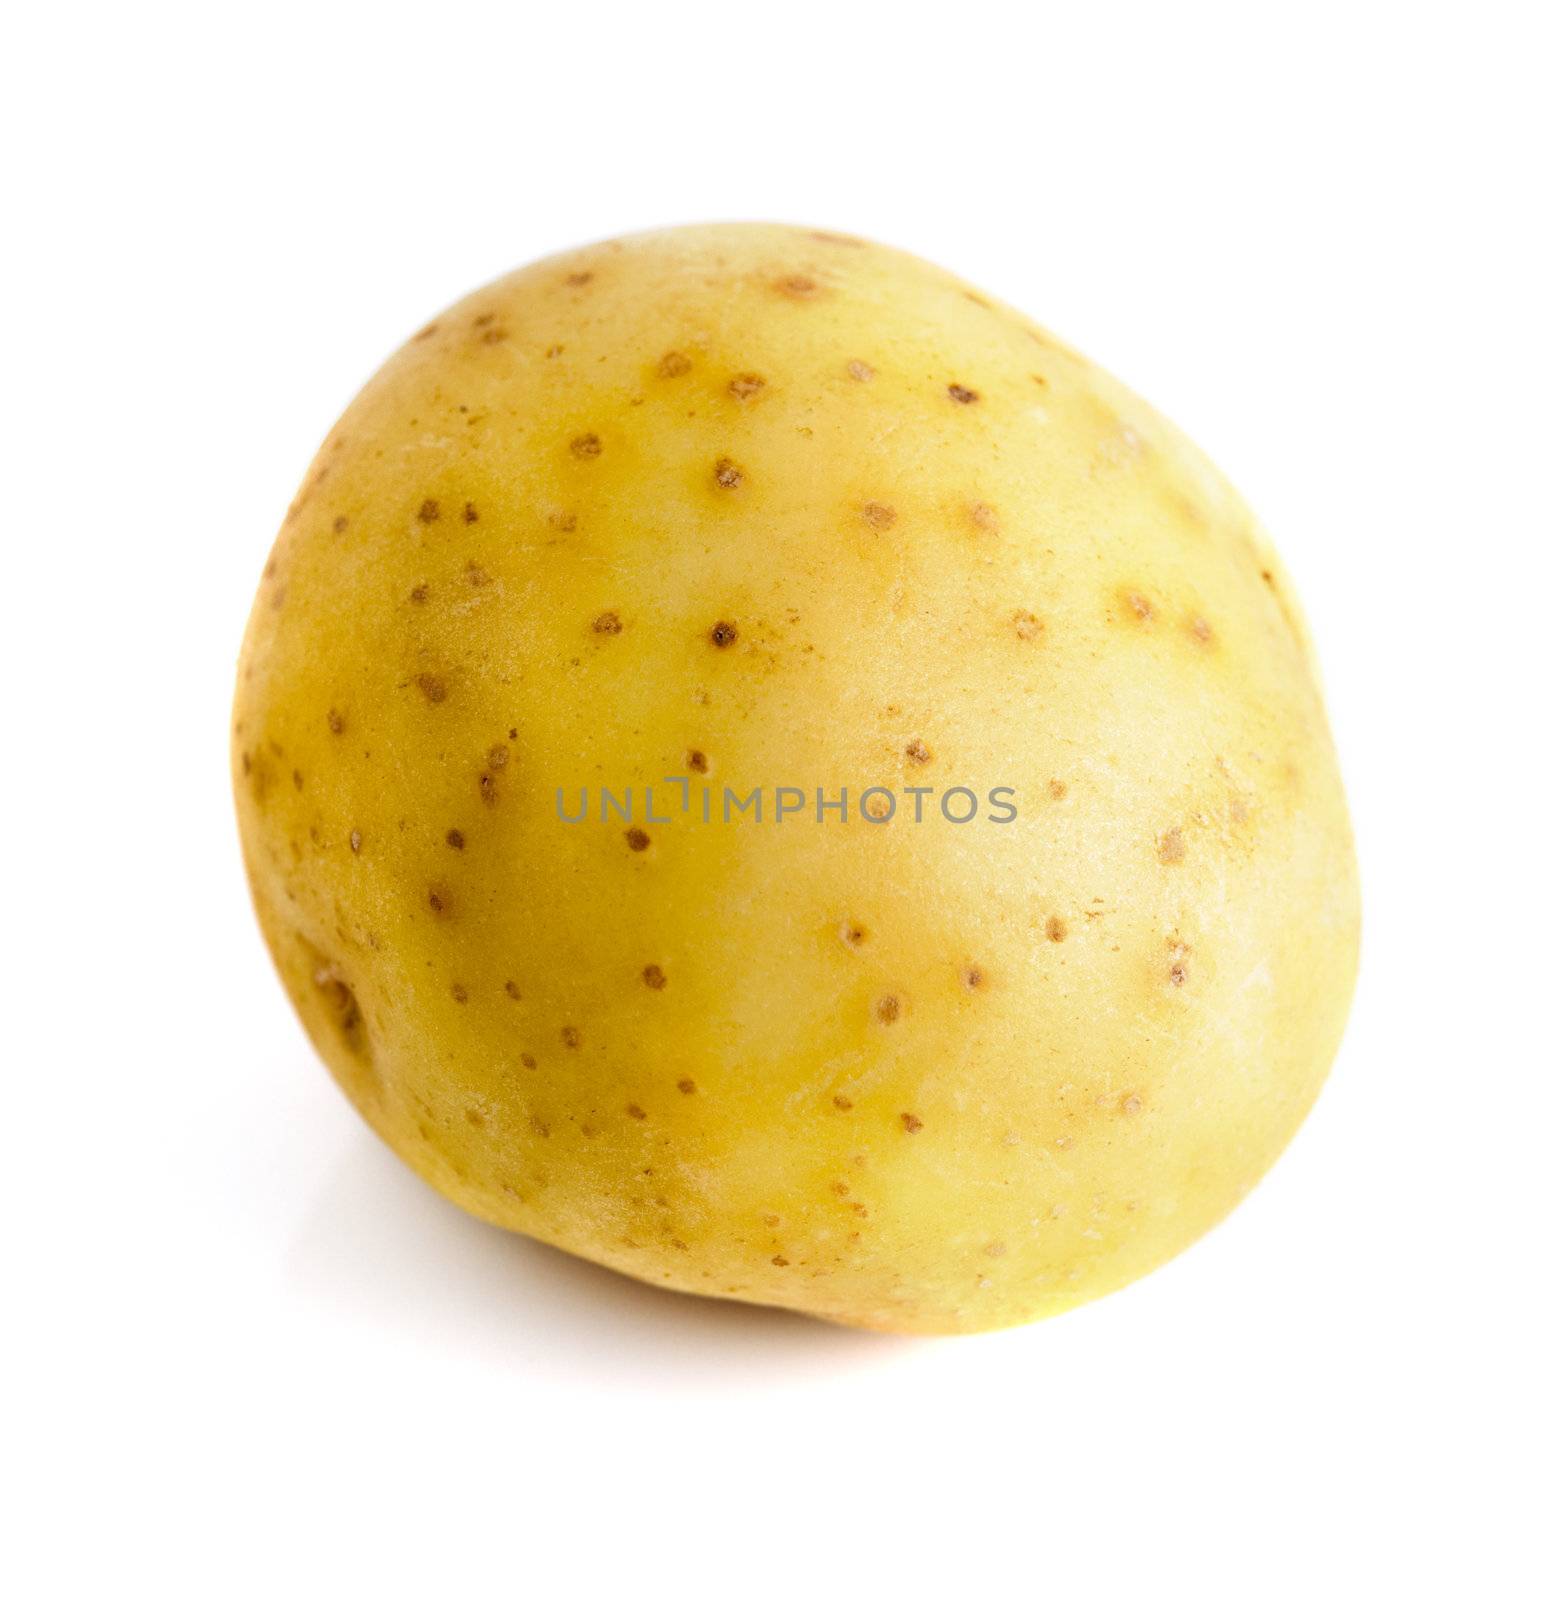 Single raw potato isolated on a white background.